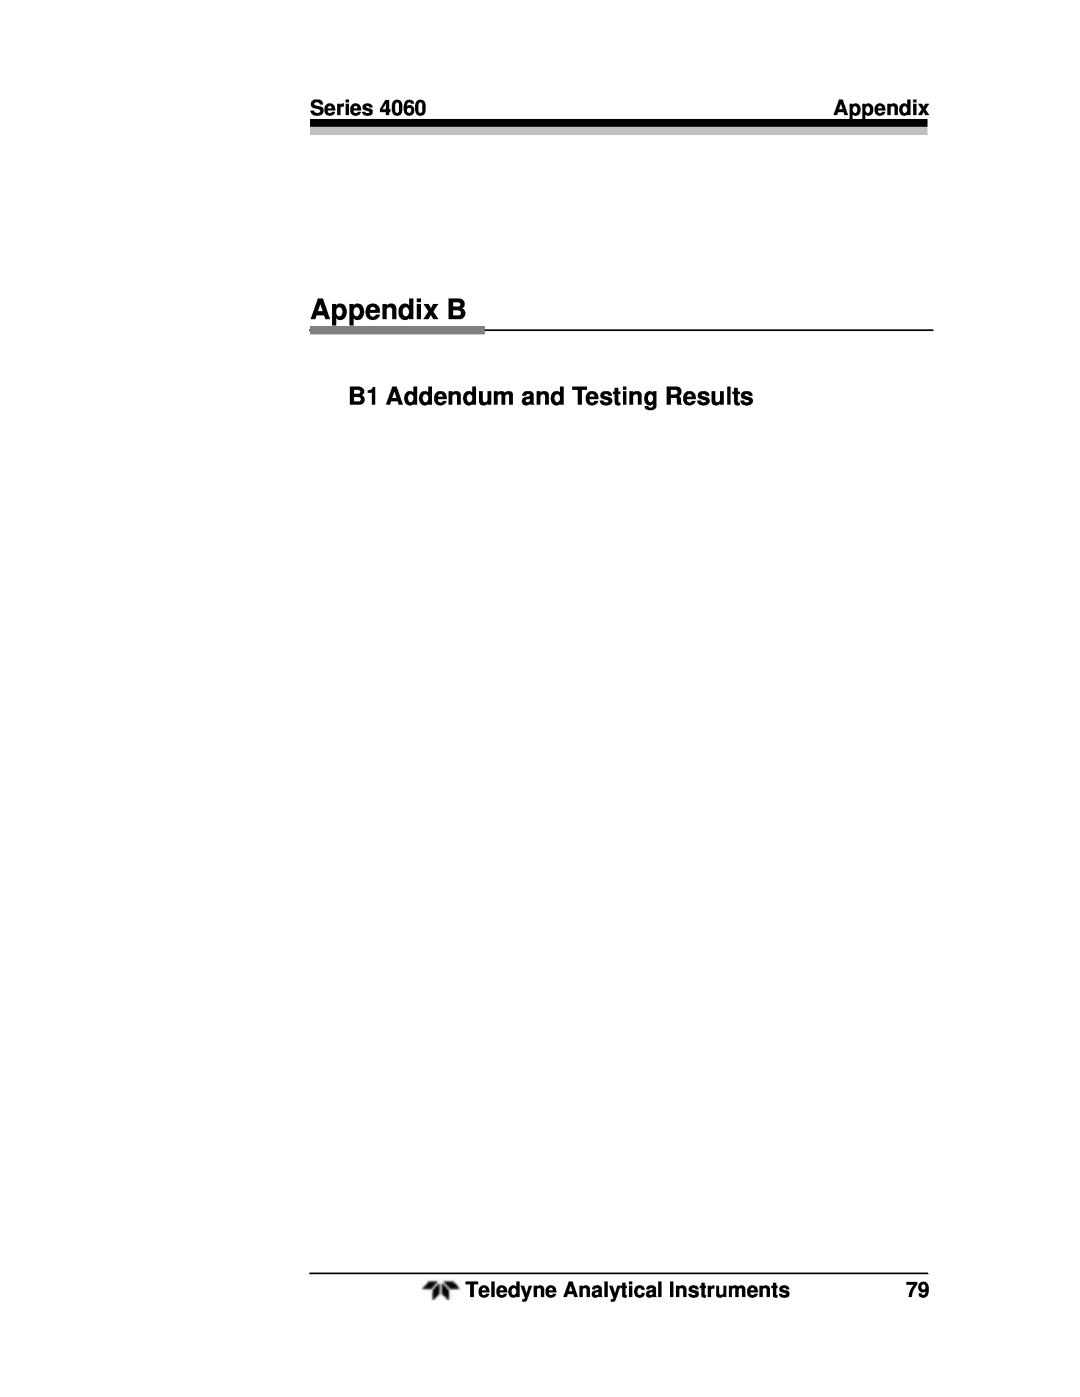 Teledyne 4060 manual Appendix B, B1 Addendum and Testing Results 